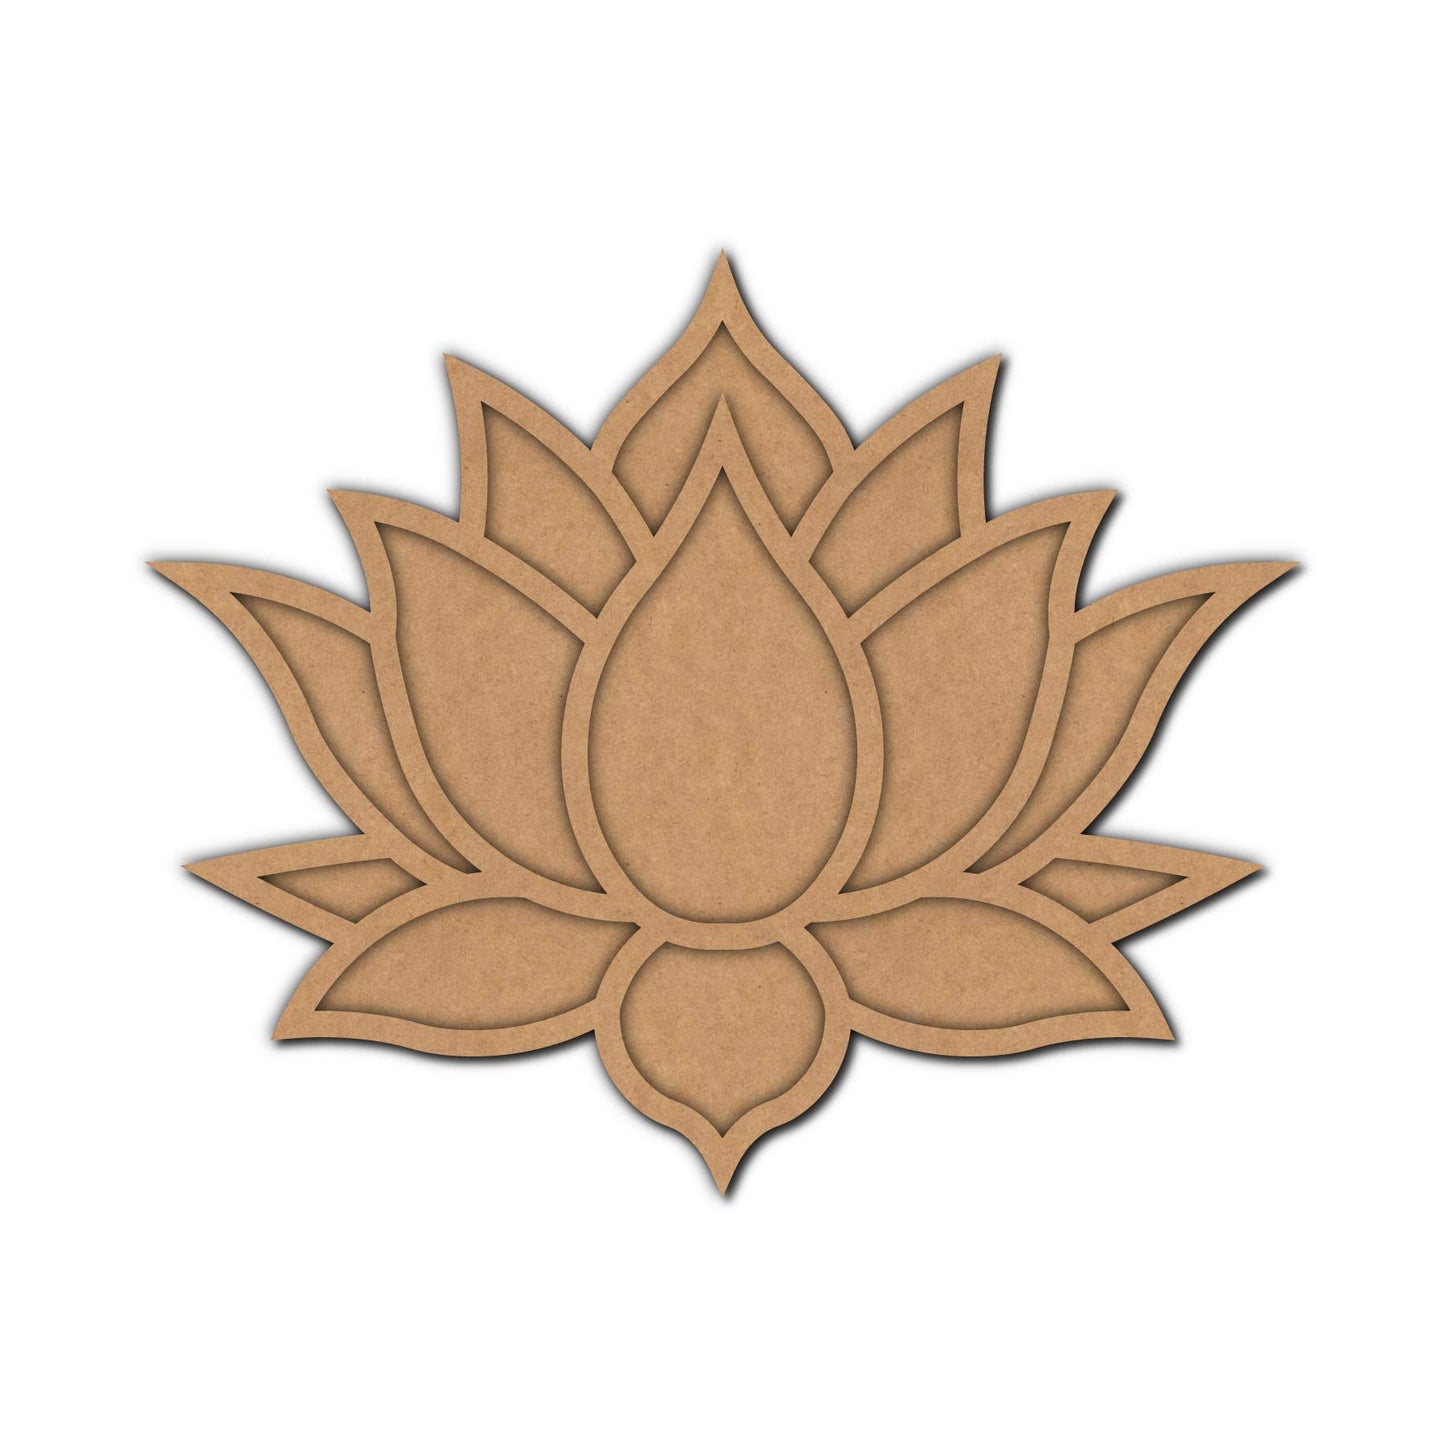 Lotus Reusable Rangoli Base MDF Design 3